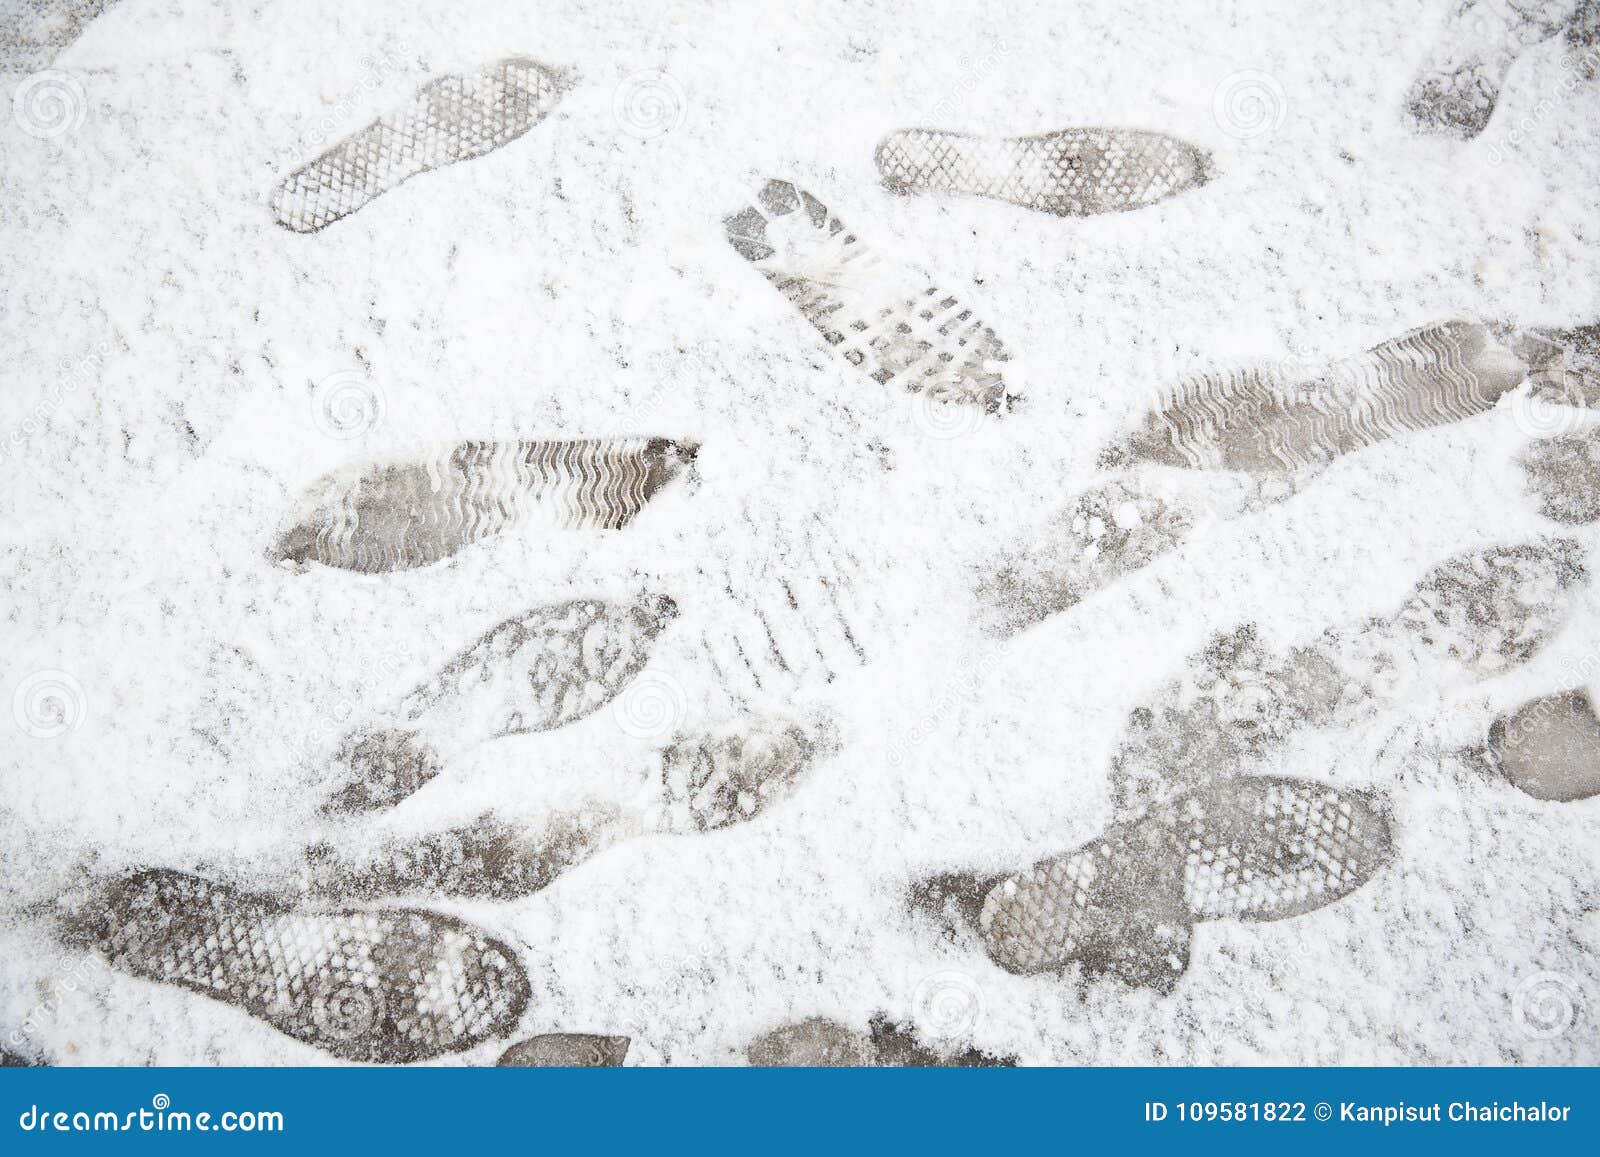 Не было видно следов. Следы ботинок на снегу. След обуви на грунте. Отпечатки следов обуви на снегу. Фотоснимок следов обуви дорожка.